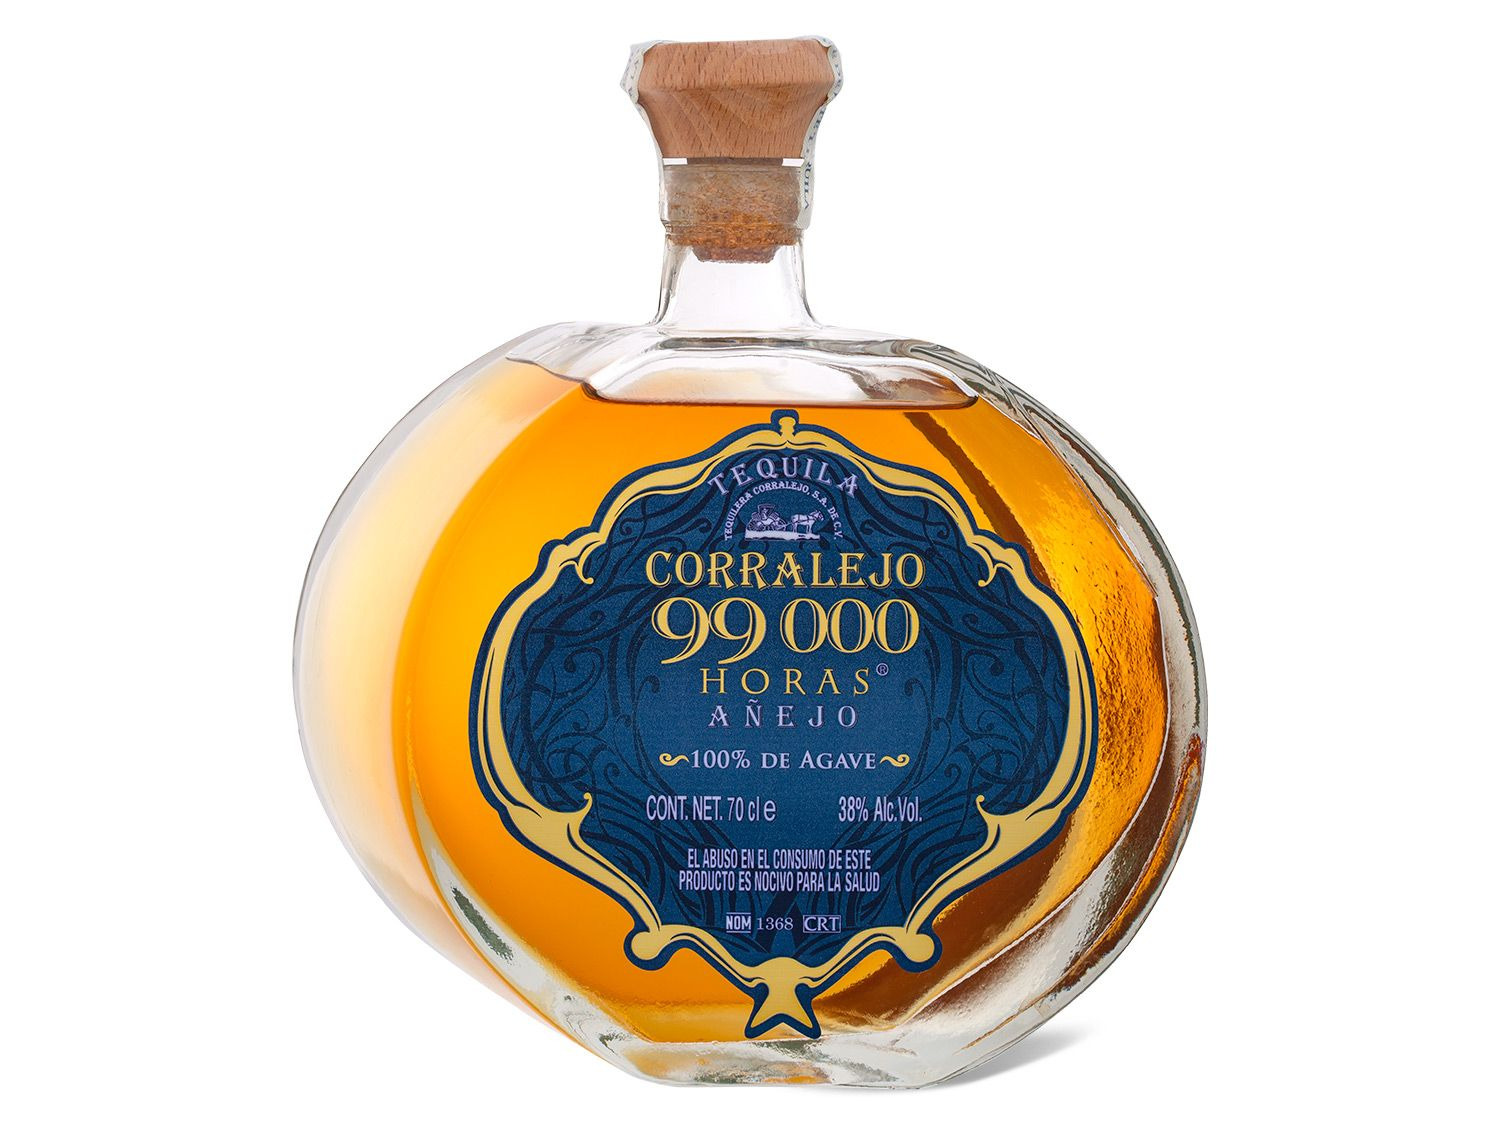 Corralejo Tequila 99.000 Horas 38% Vol | LIDL Añejo